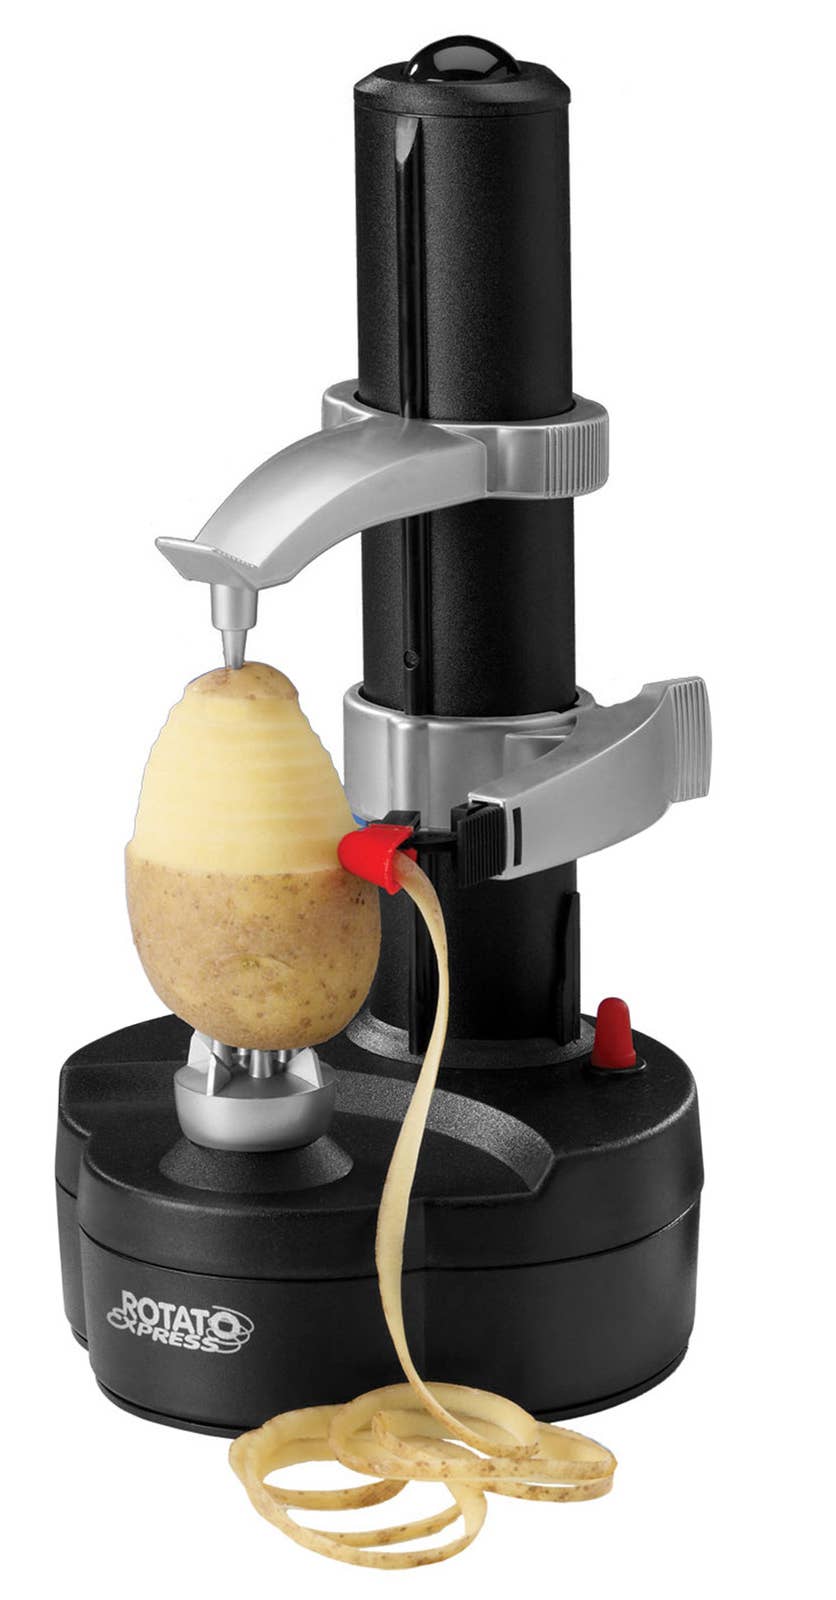 Rotato Express Potato Peeler by Starfrit - Sam's Club